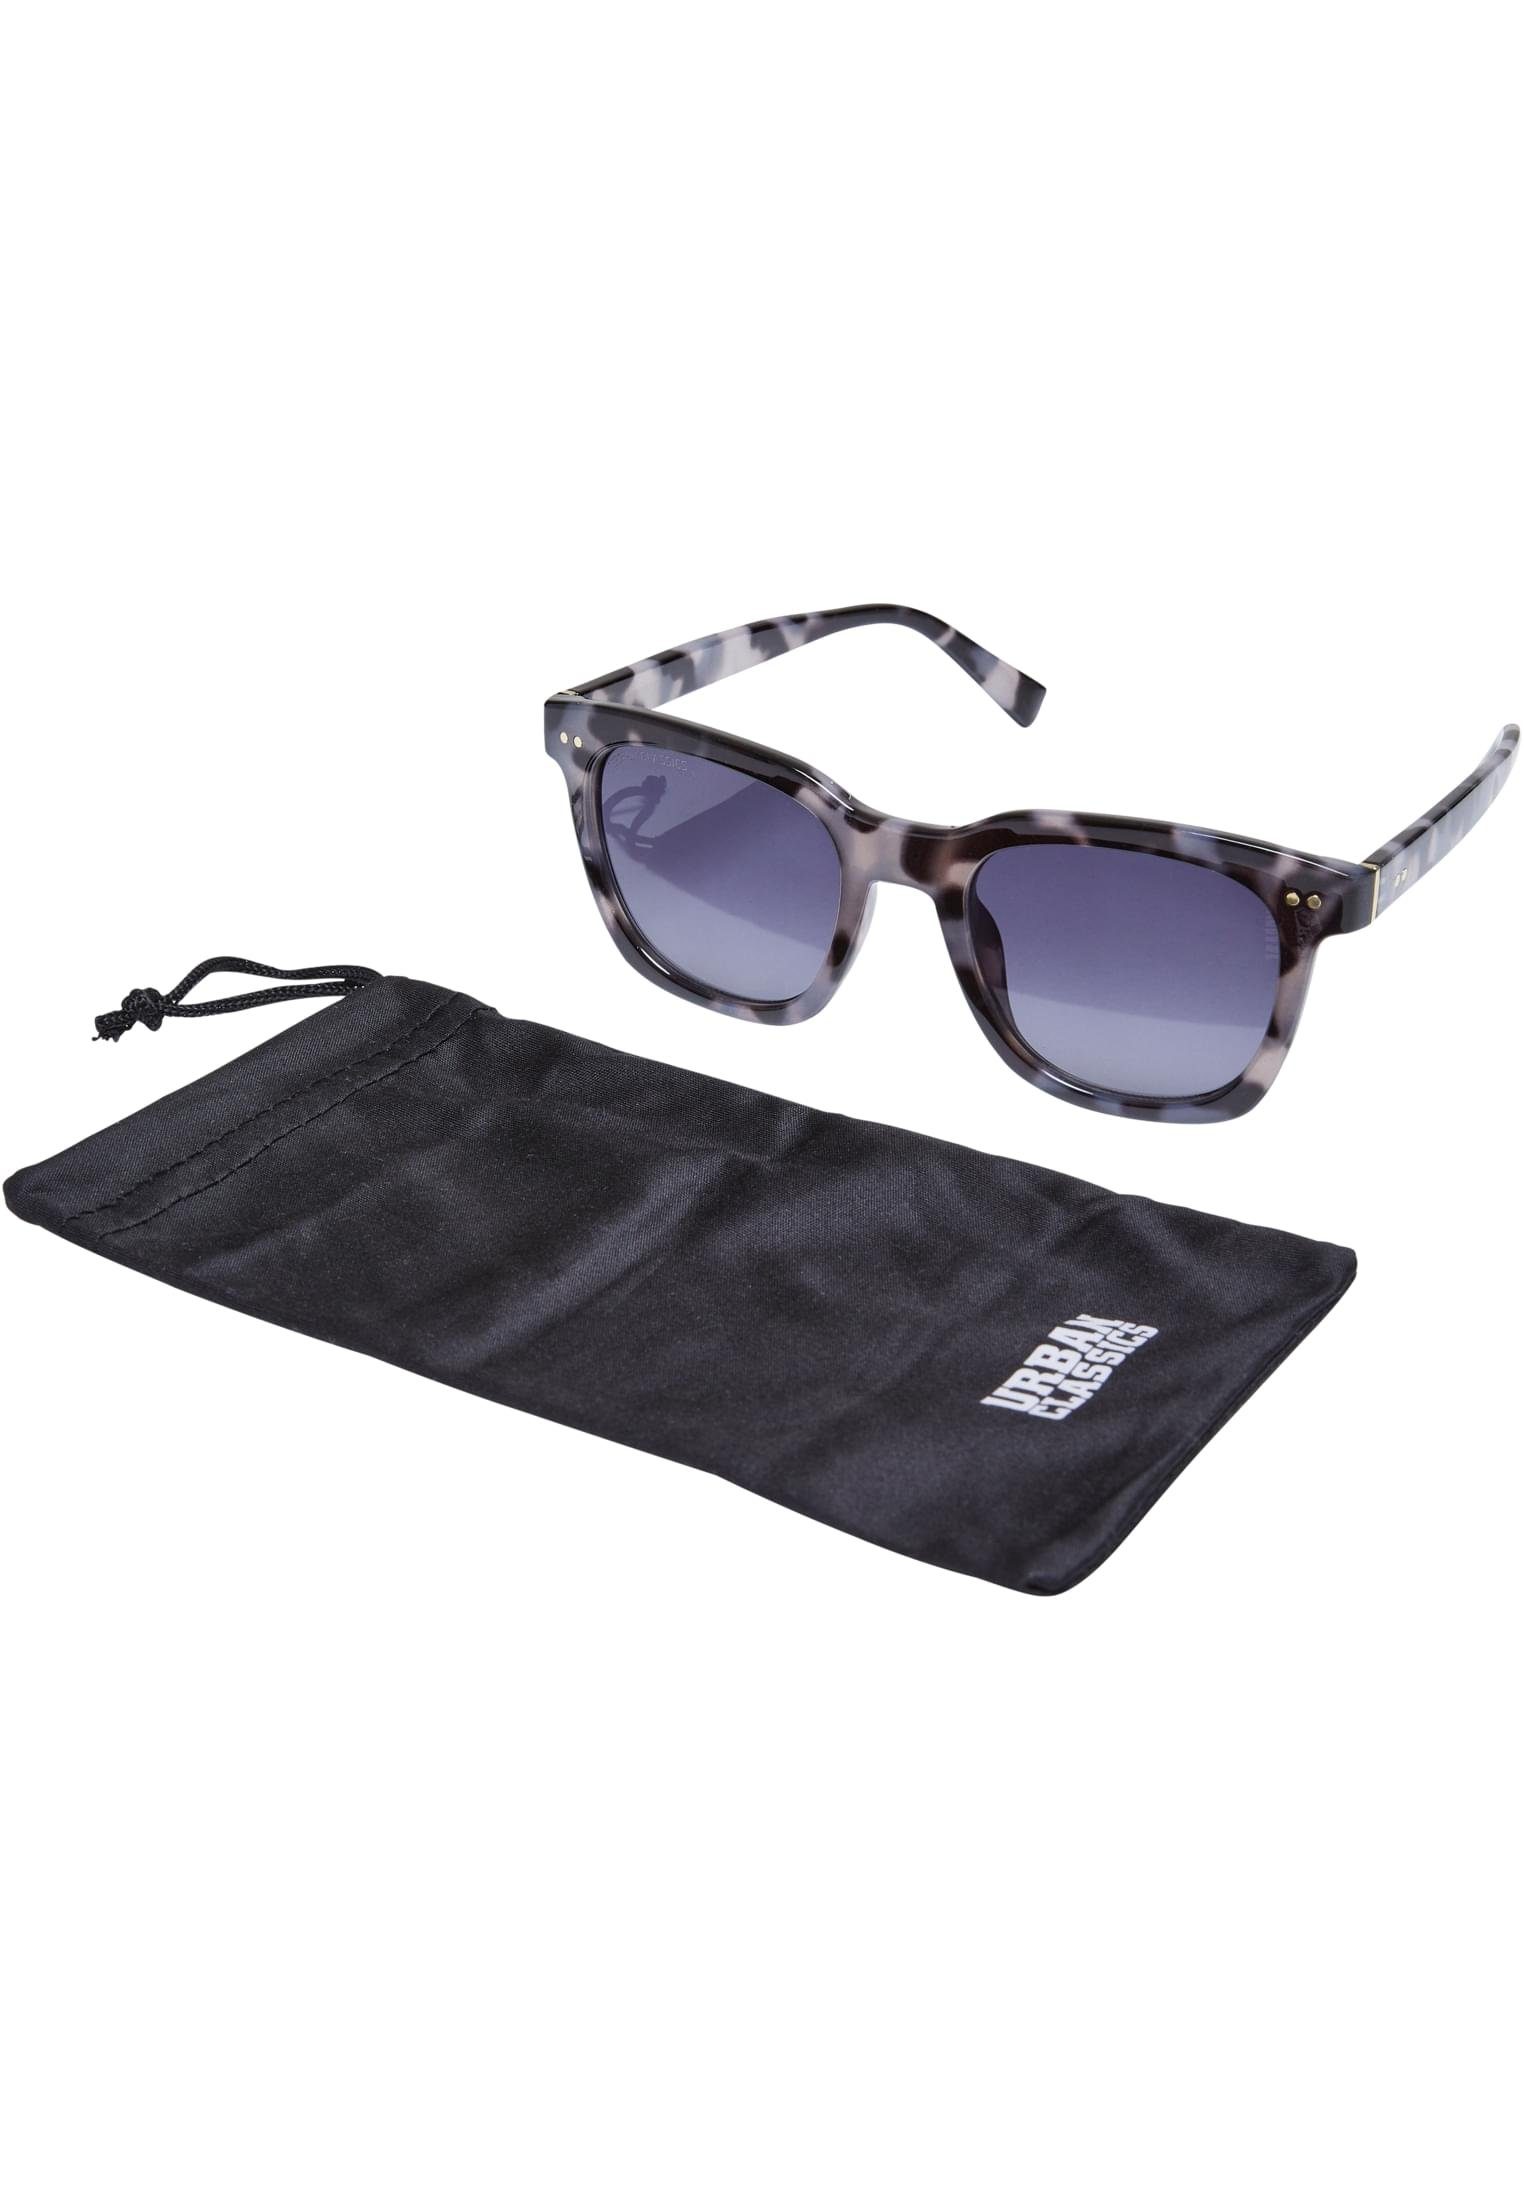 URBAN CLASSICS Sonnenbrille Unisex Sunglasses als modisches Naples, werden Kann getragen Accessoire